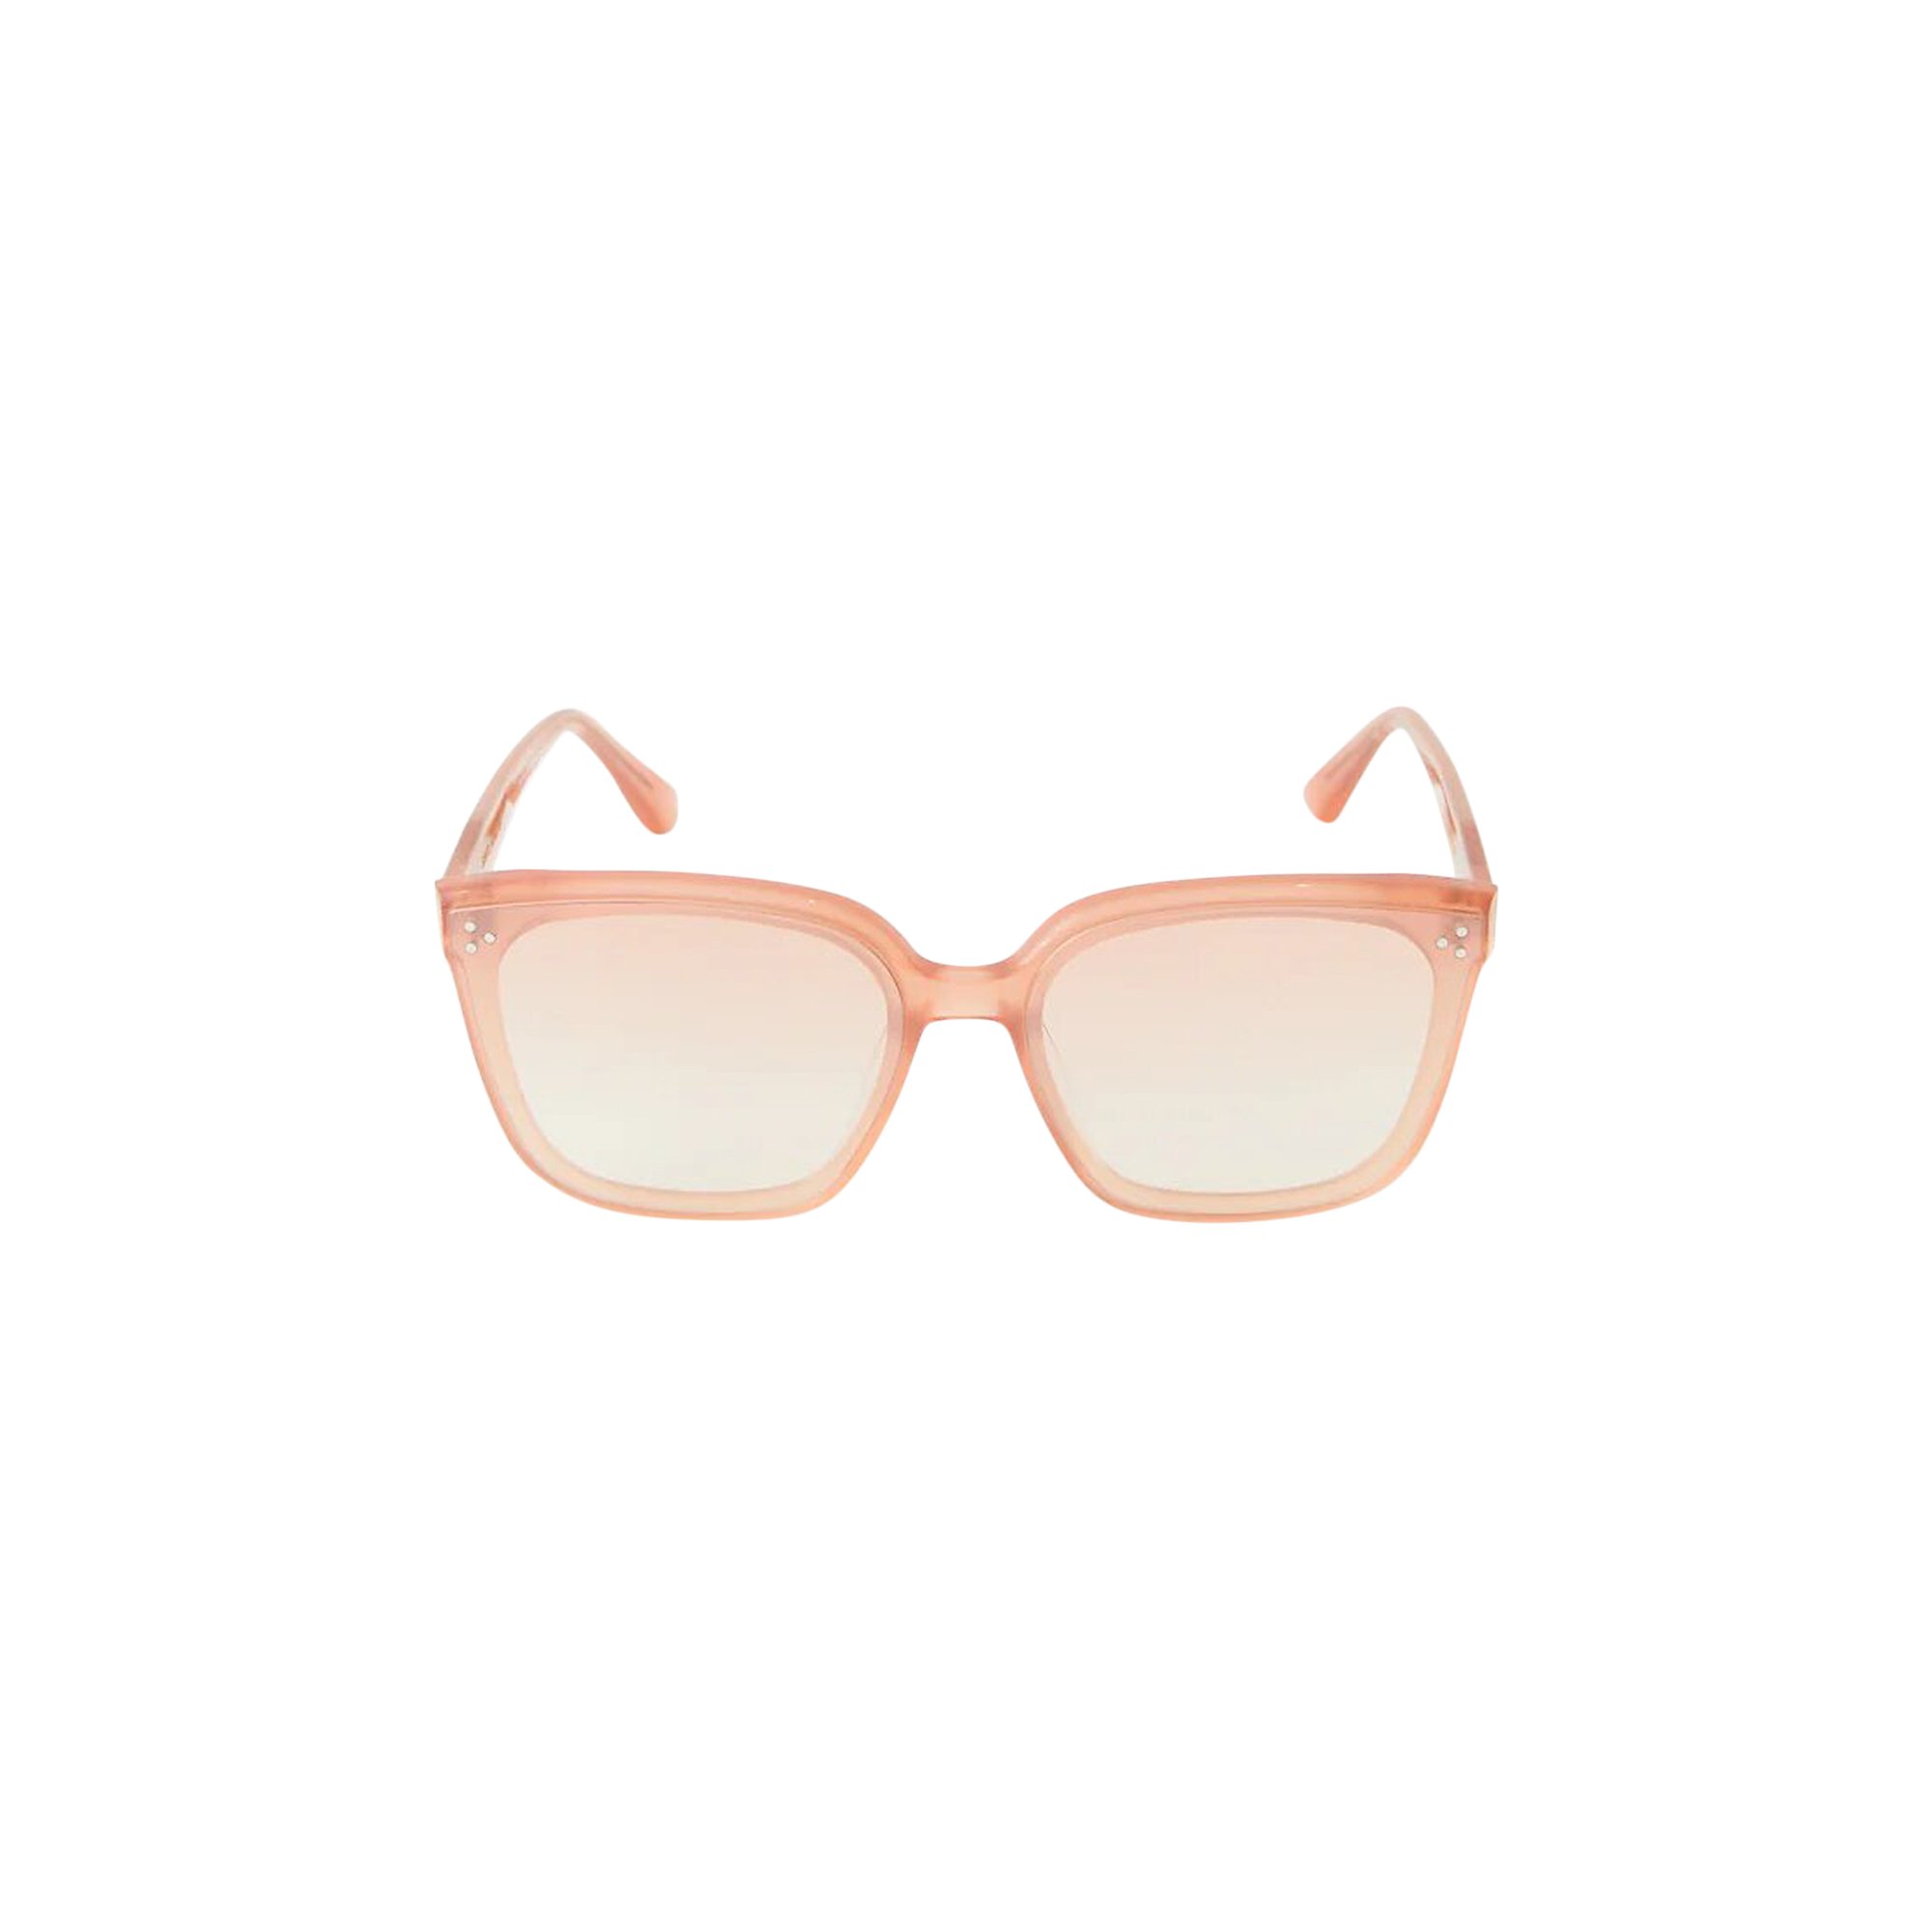 Солнцезащитные очки Gentle Monster Palette PC7, Розовые/Прозрачные